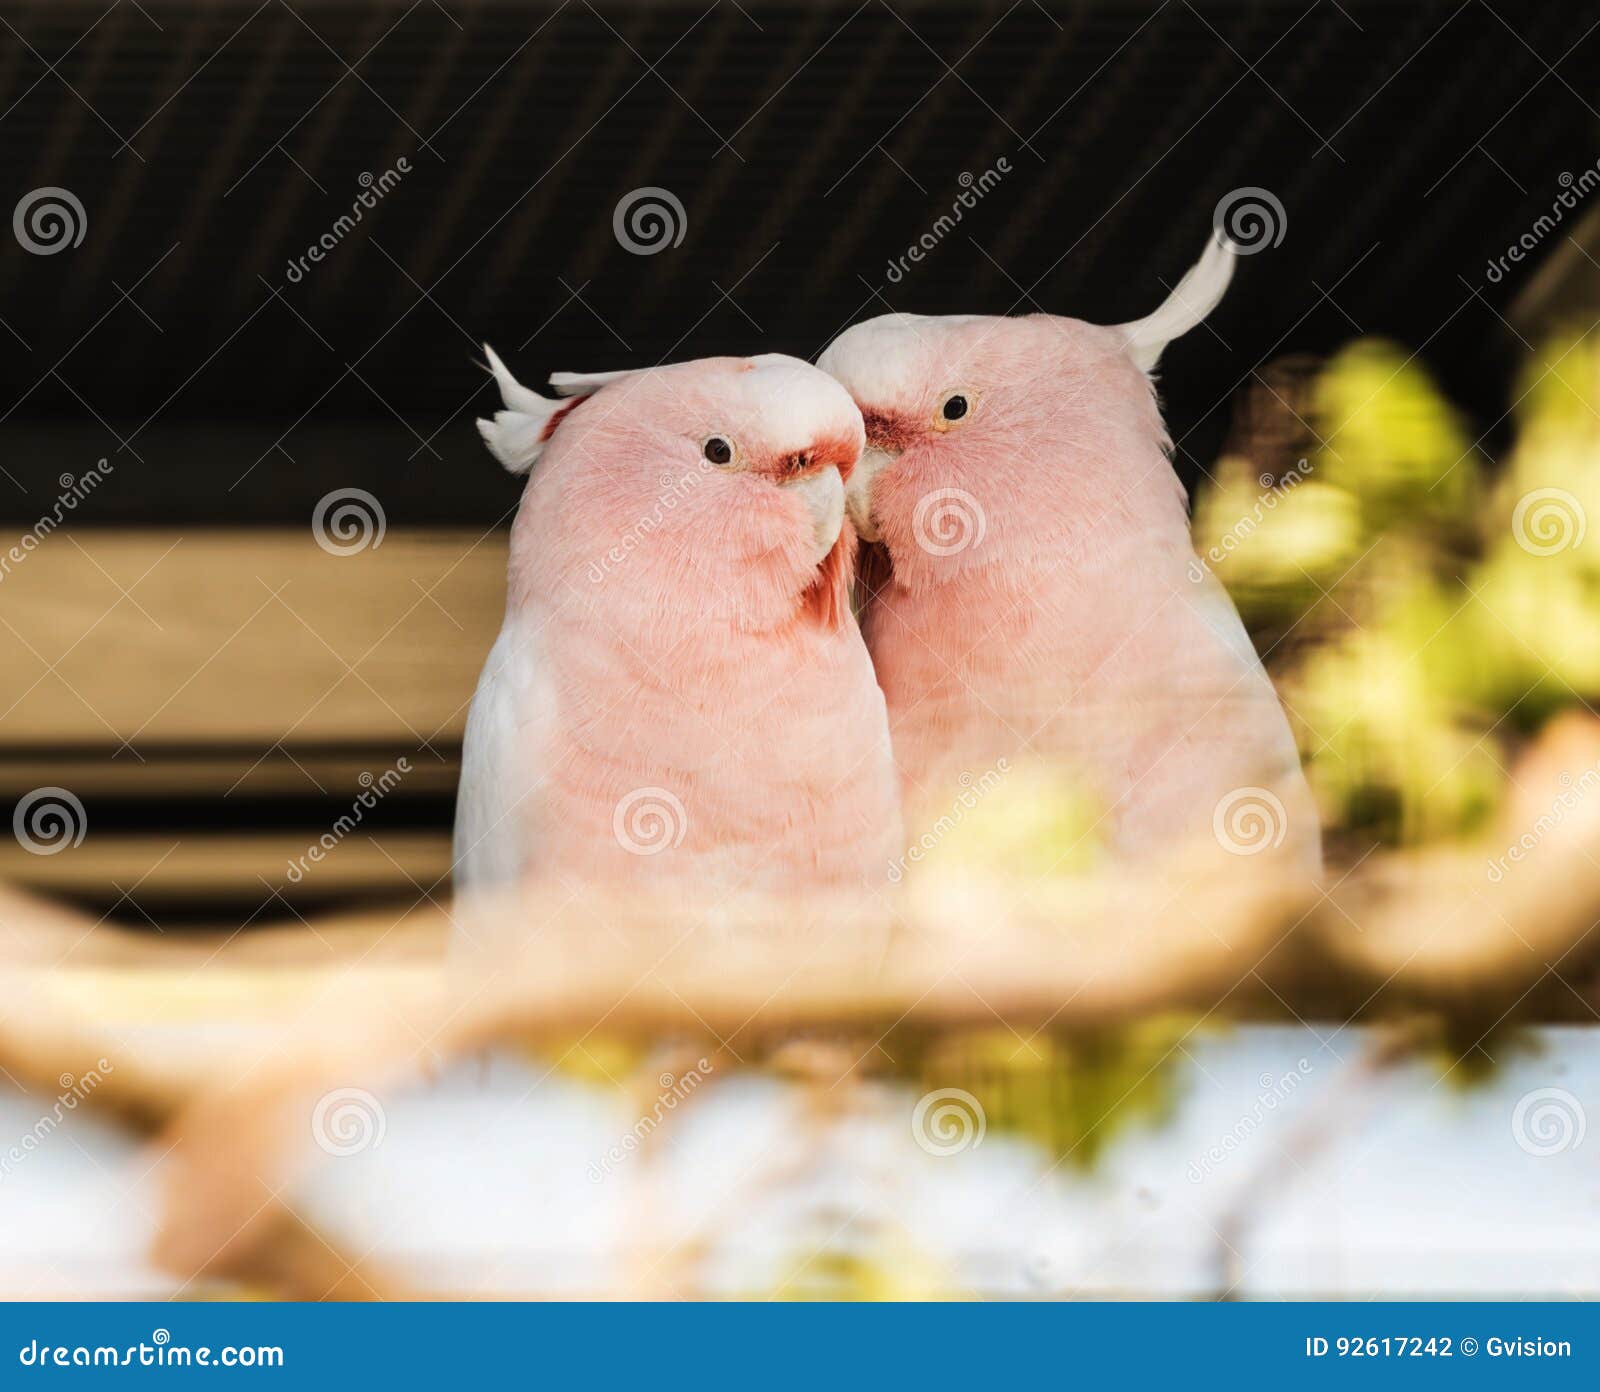 Love Birds stock photo. Image of avian, plumage, couple - 92617242